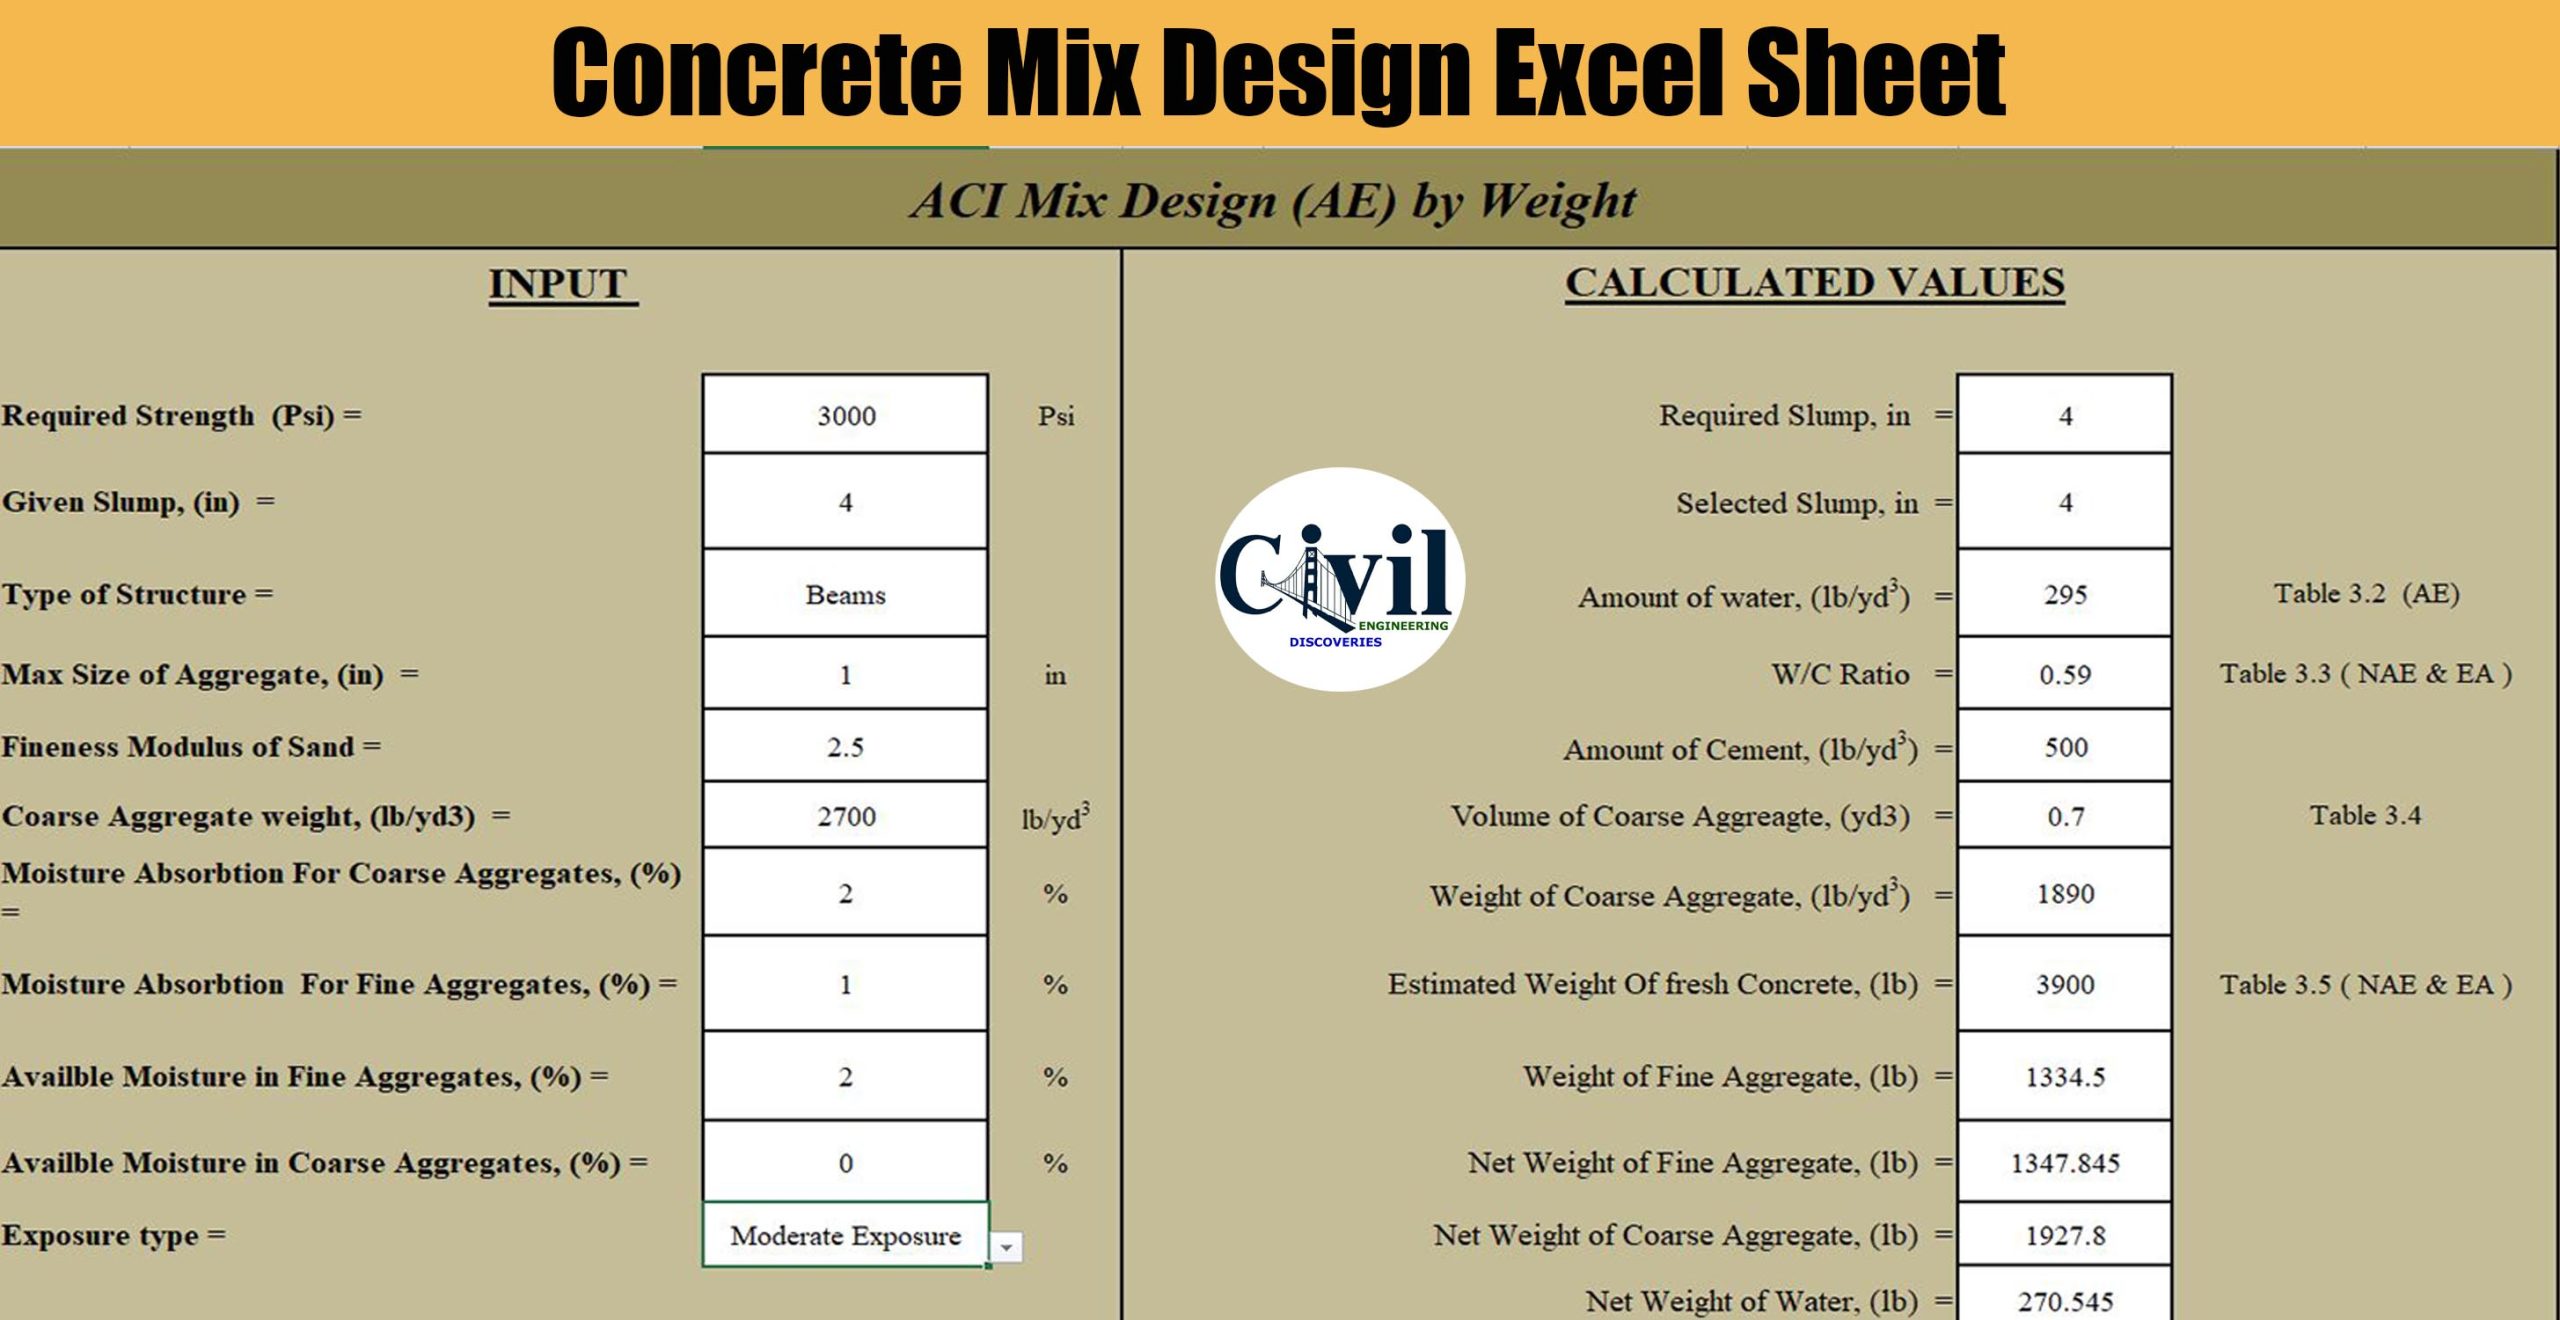 Concrete Mix Design Excel Sheet According To ACI Design Code